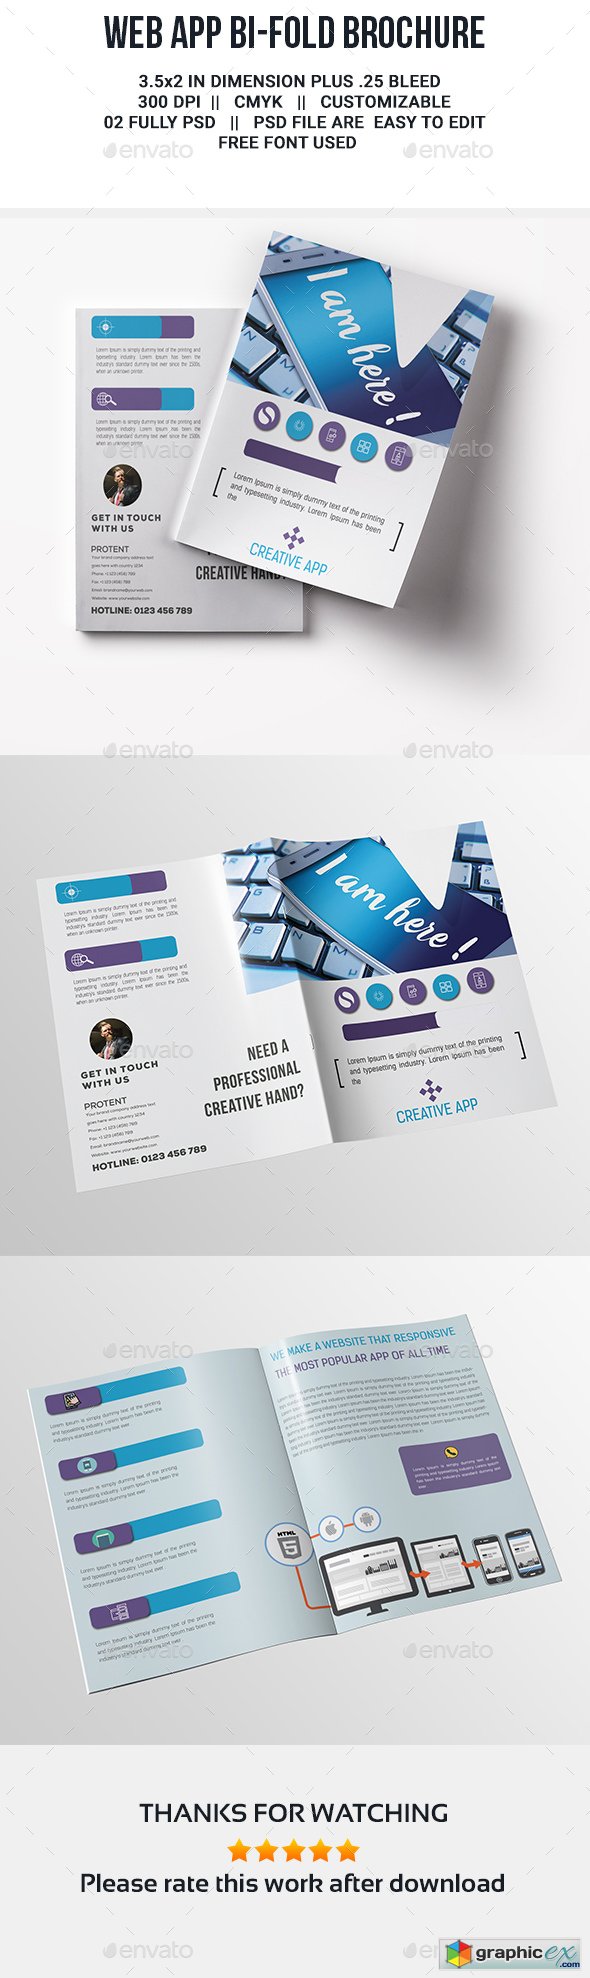 Web app Bi-fold Brochure template